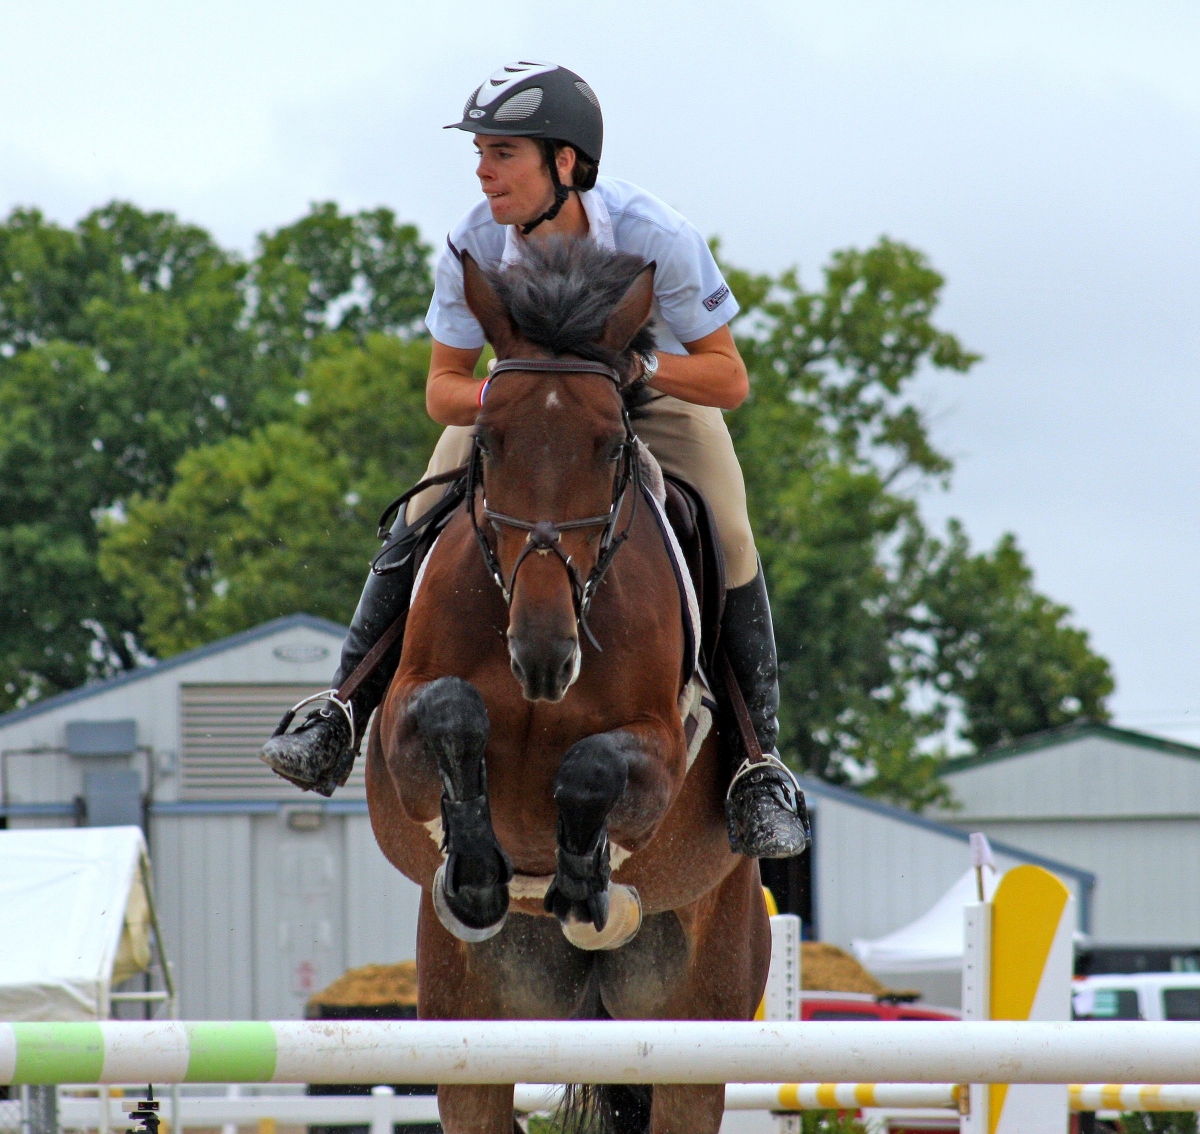 Horse and Rider Jumping